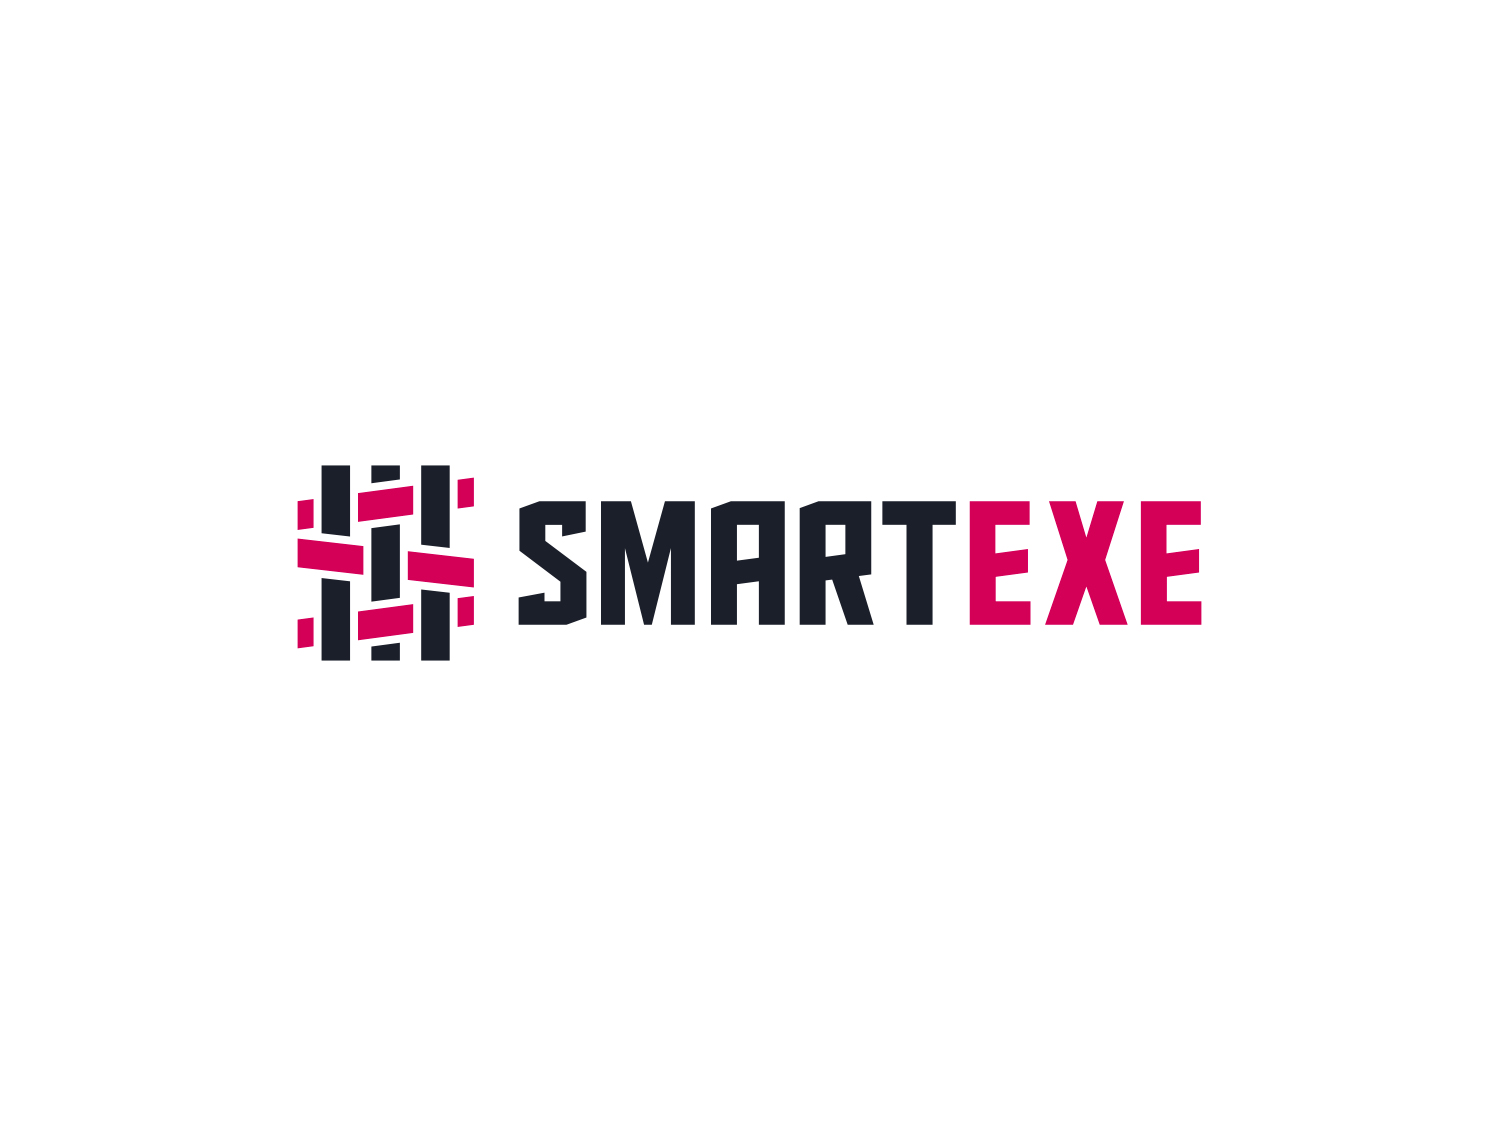 smartexe logo design